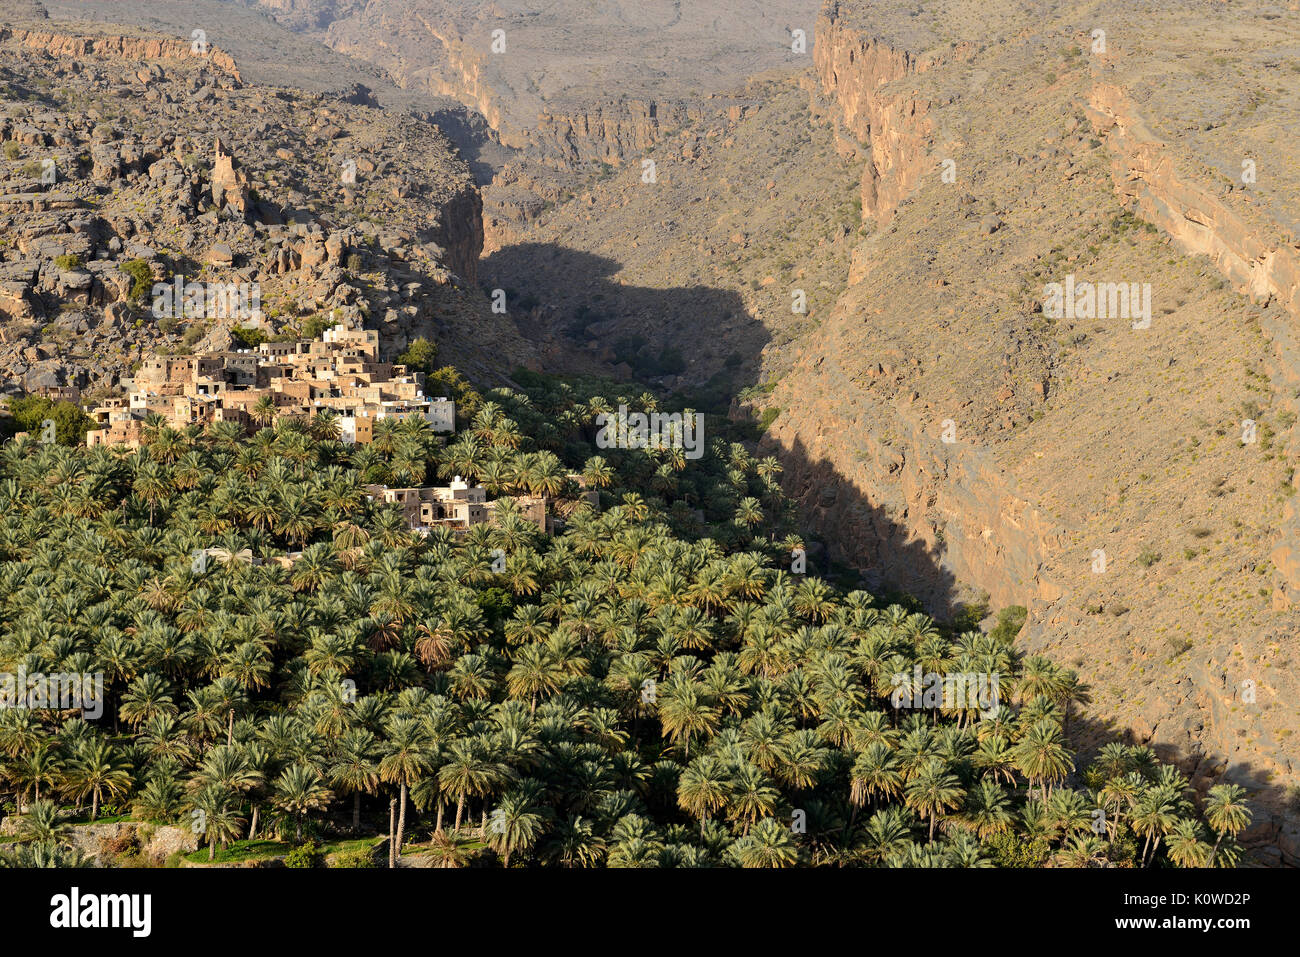 Village of Misfat al Abriyyin, Hajar al Gharbi mountains, Dakhiliyah, Oman Stock Photo